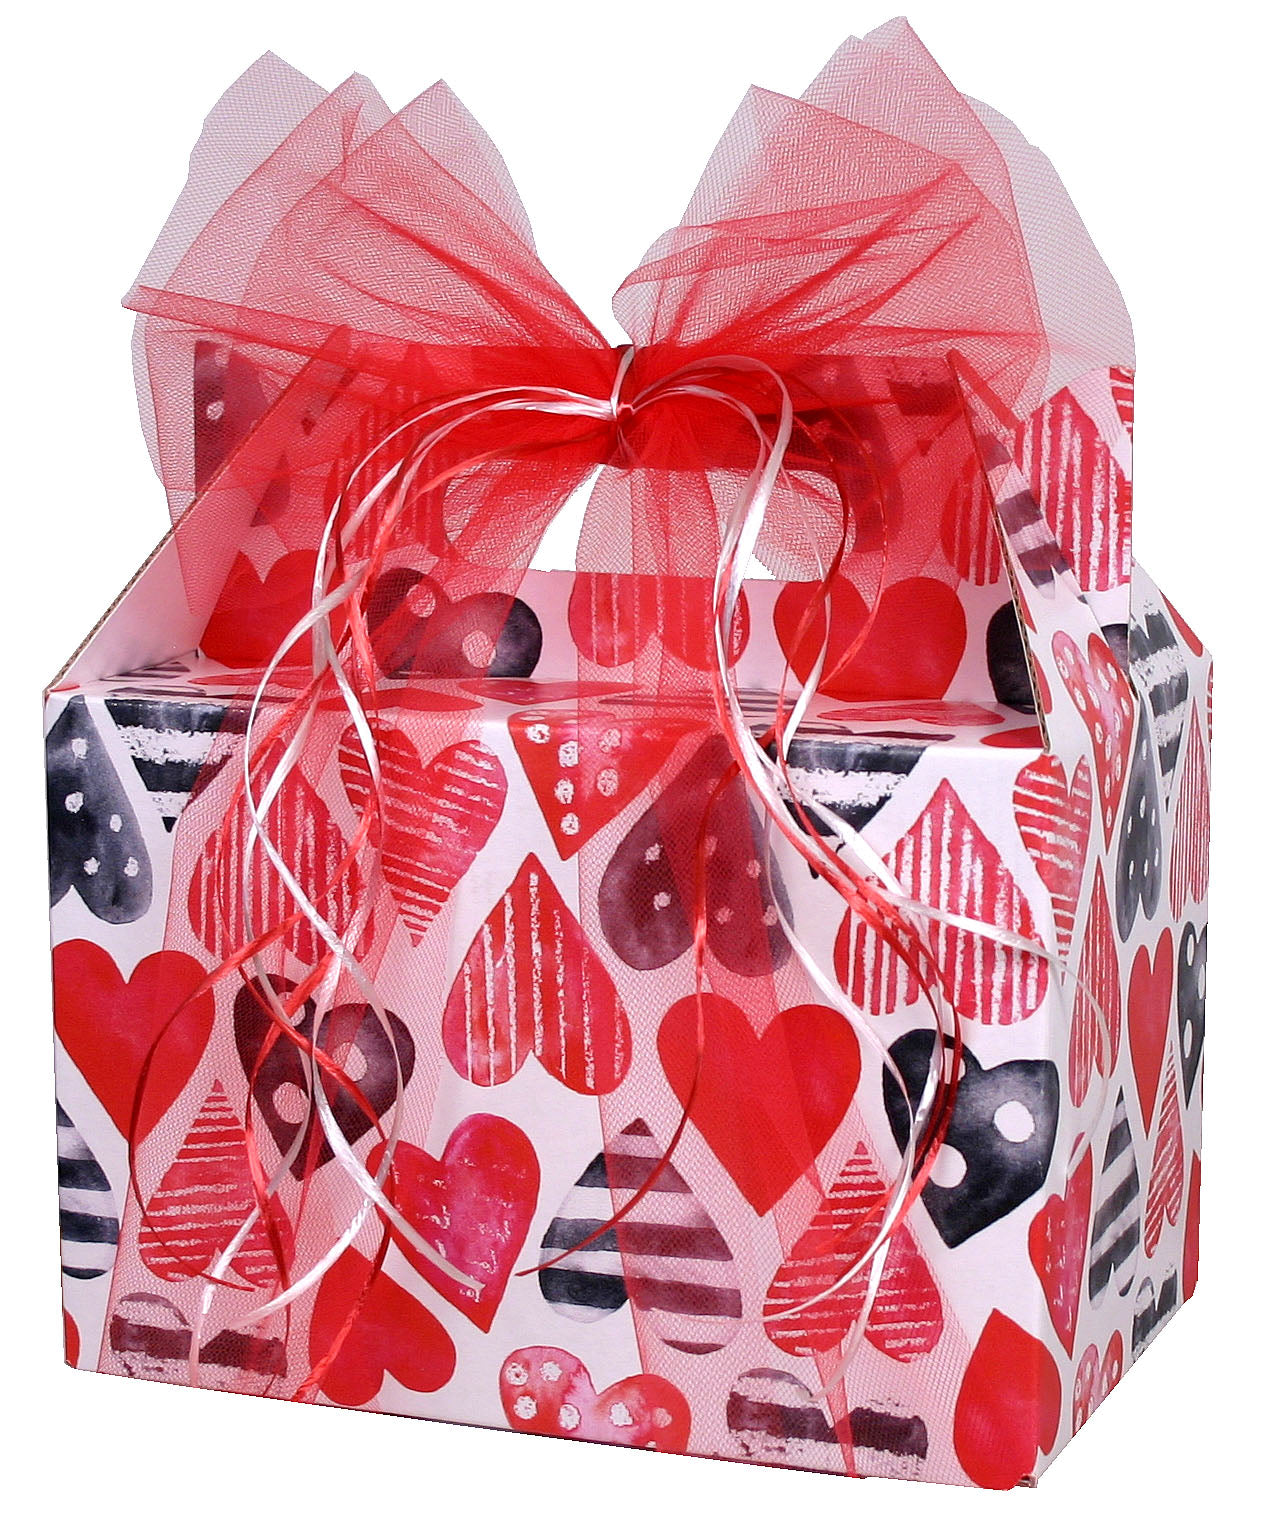 Radiate the Glow in the Dark Valentine's Day Gift - beyondbookmarks.com